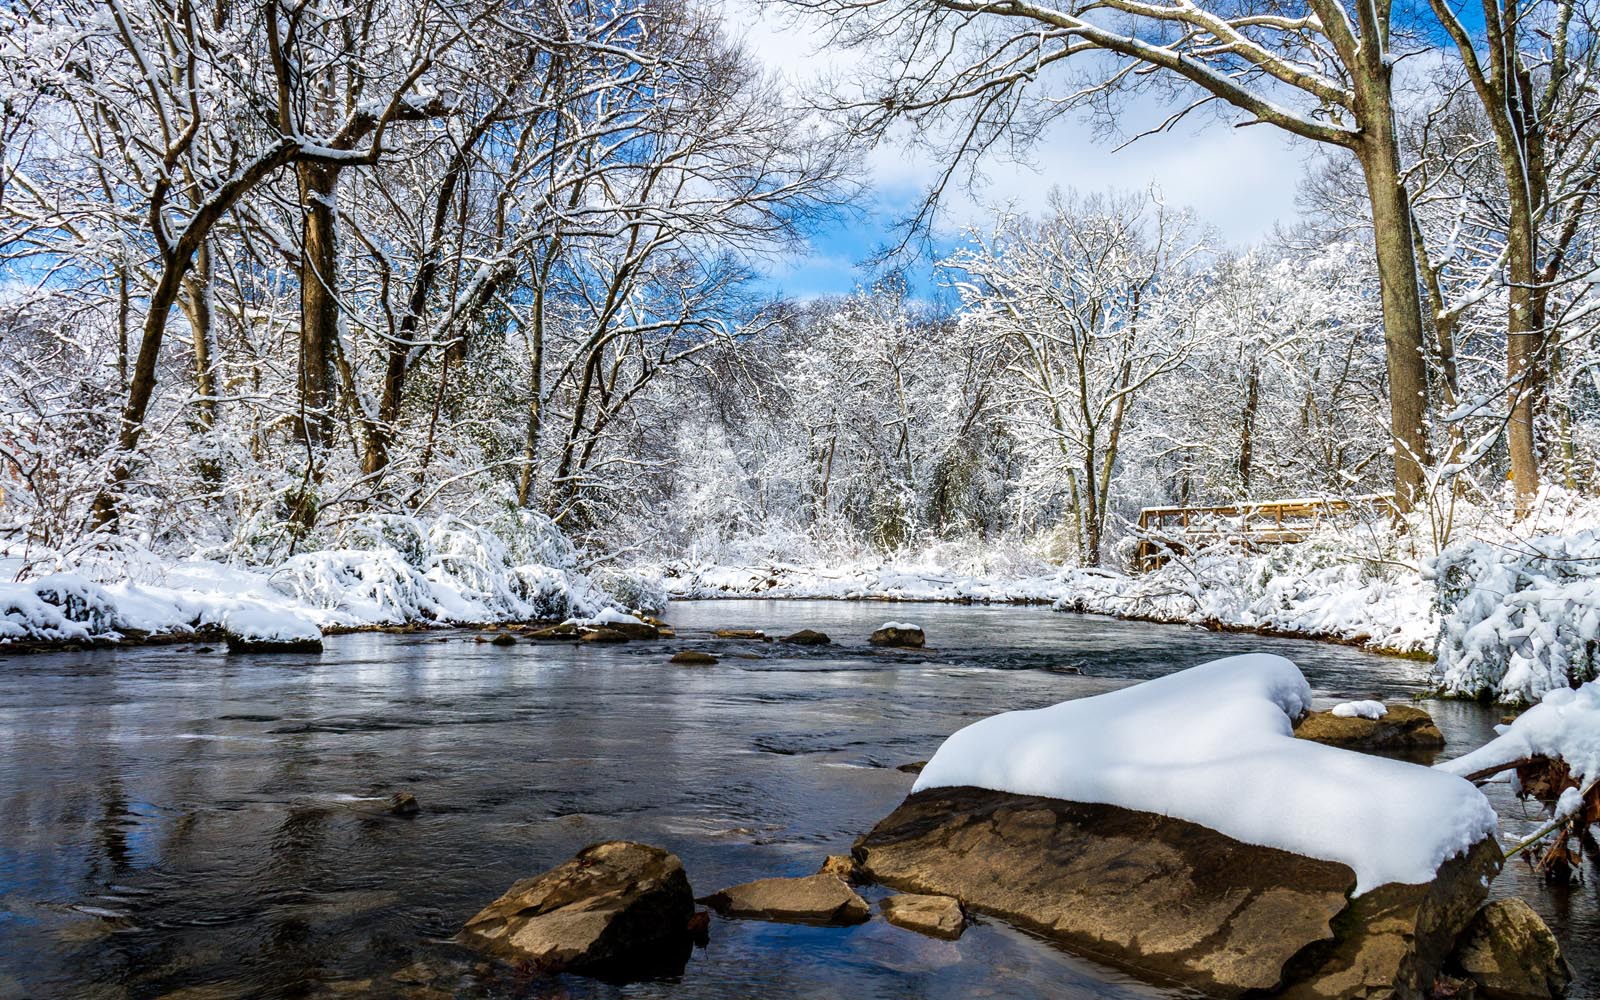 Image of TN creek in winter, blue skies, snow on rocks and banks of creek.